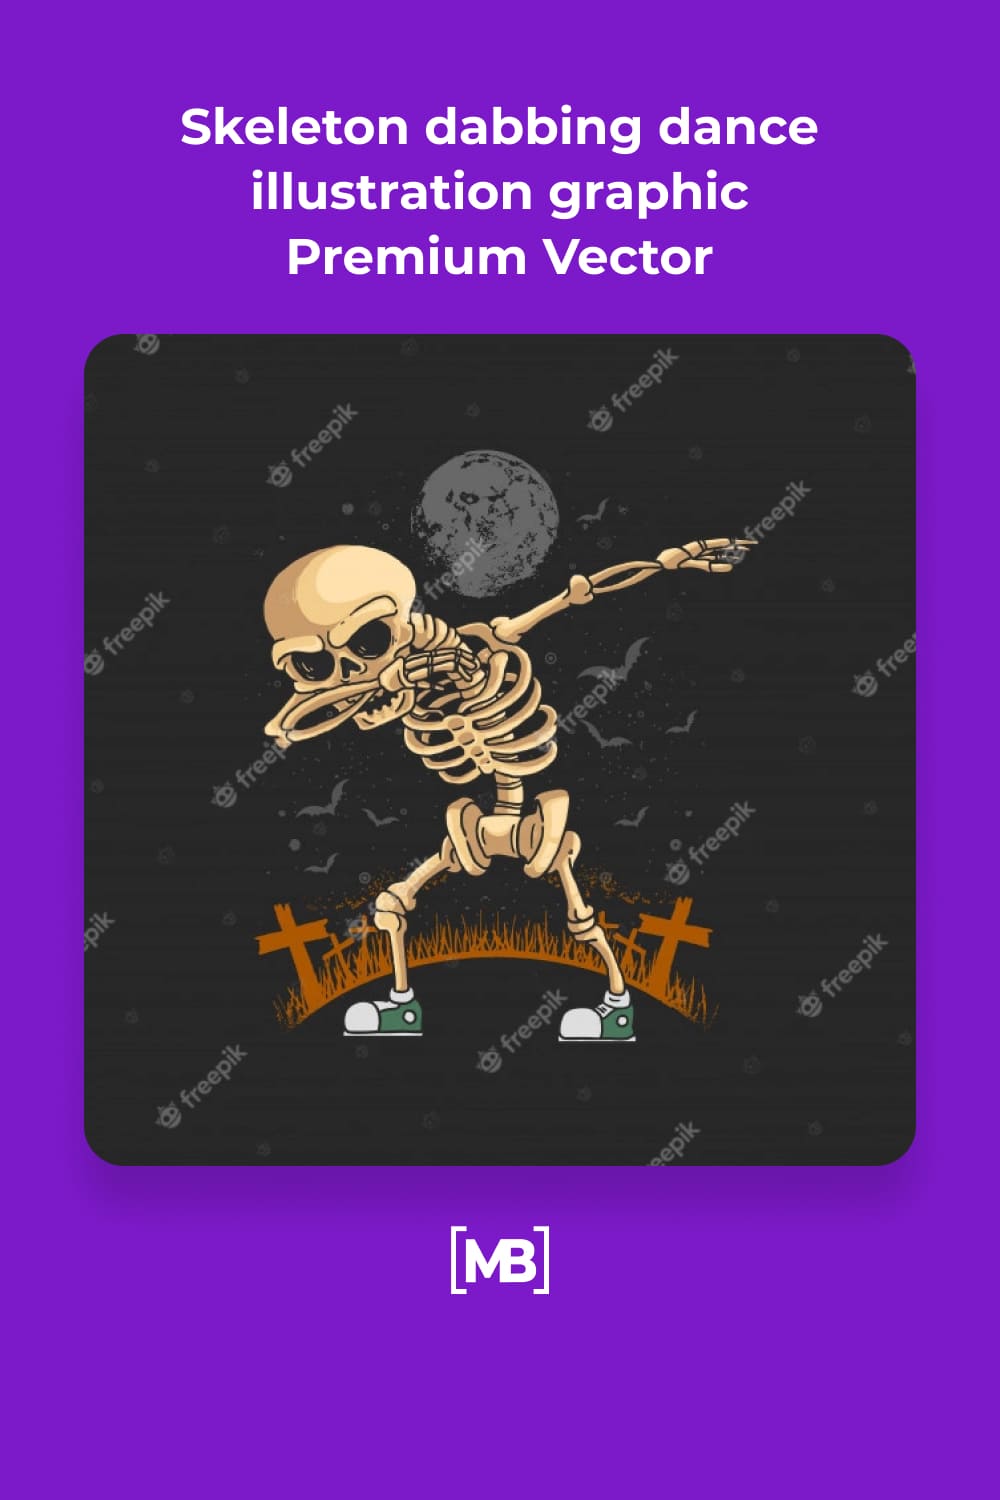 1 Skeleton dabbing dance illustration graphic Premium Vector